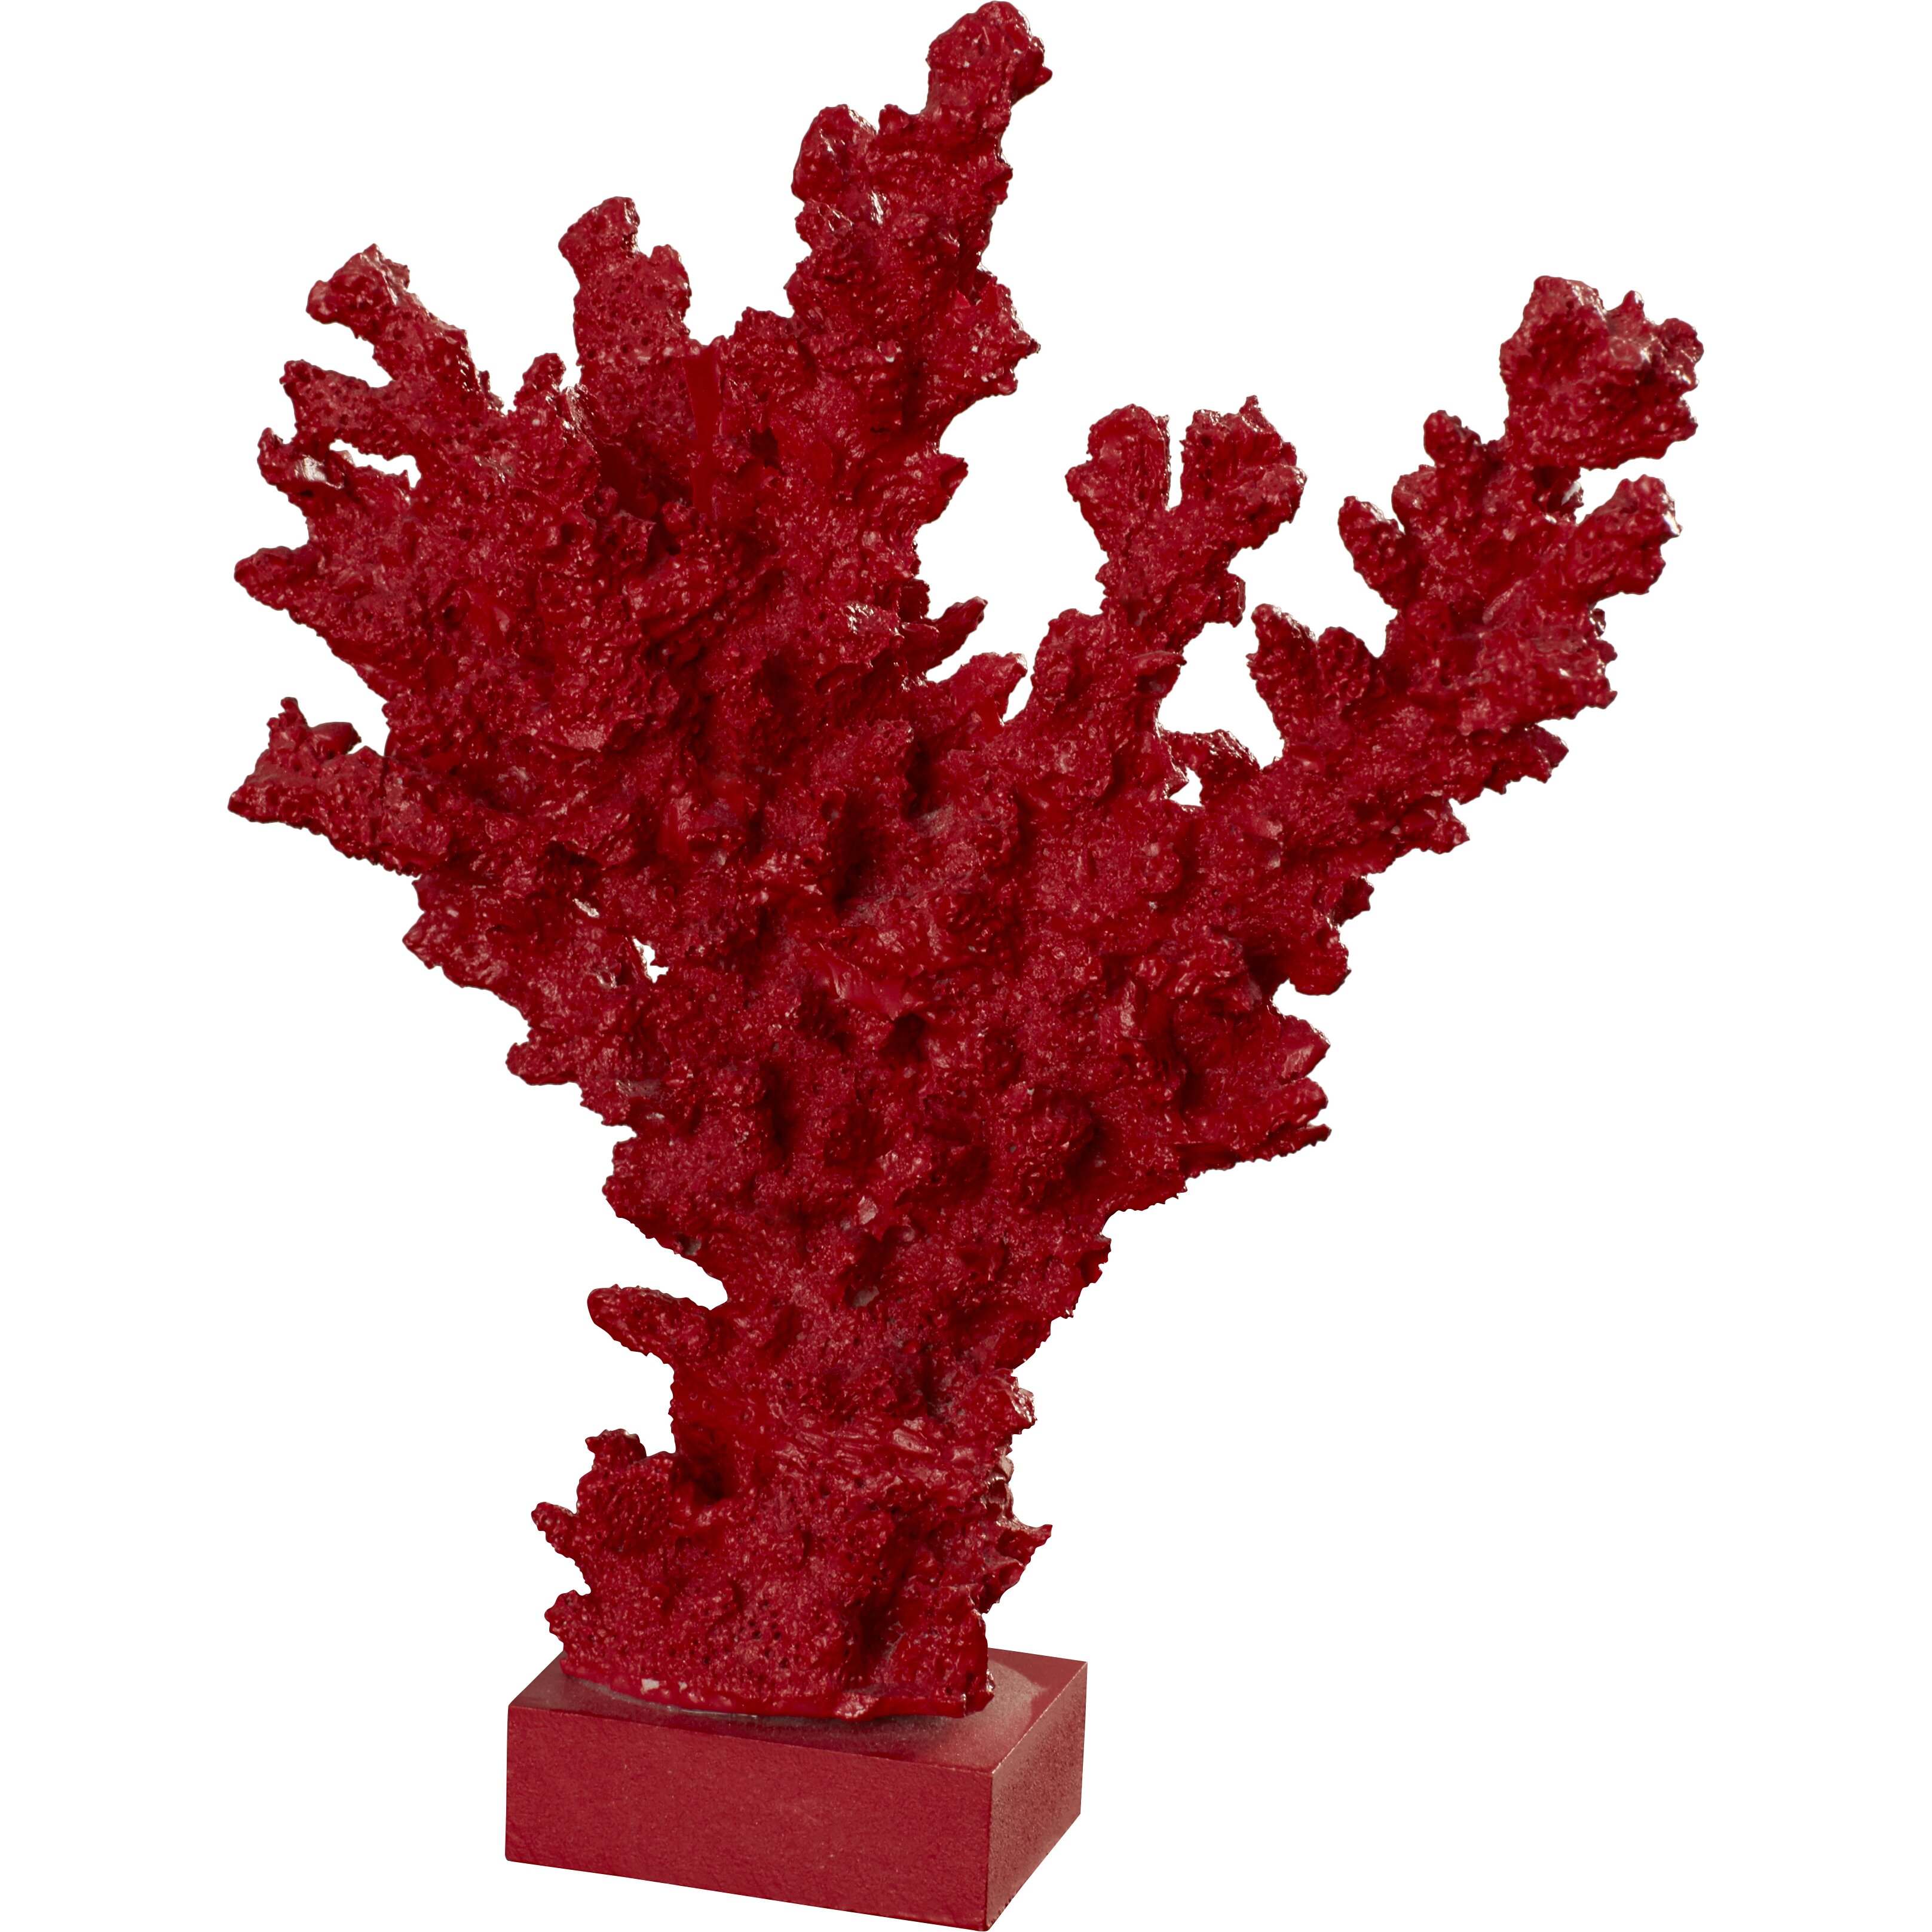 Breakwater Bay Faux Coral Sculpture & Reviews | Wayfair